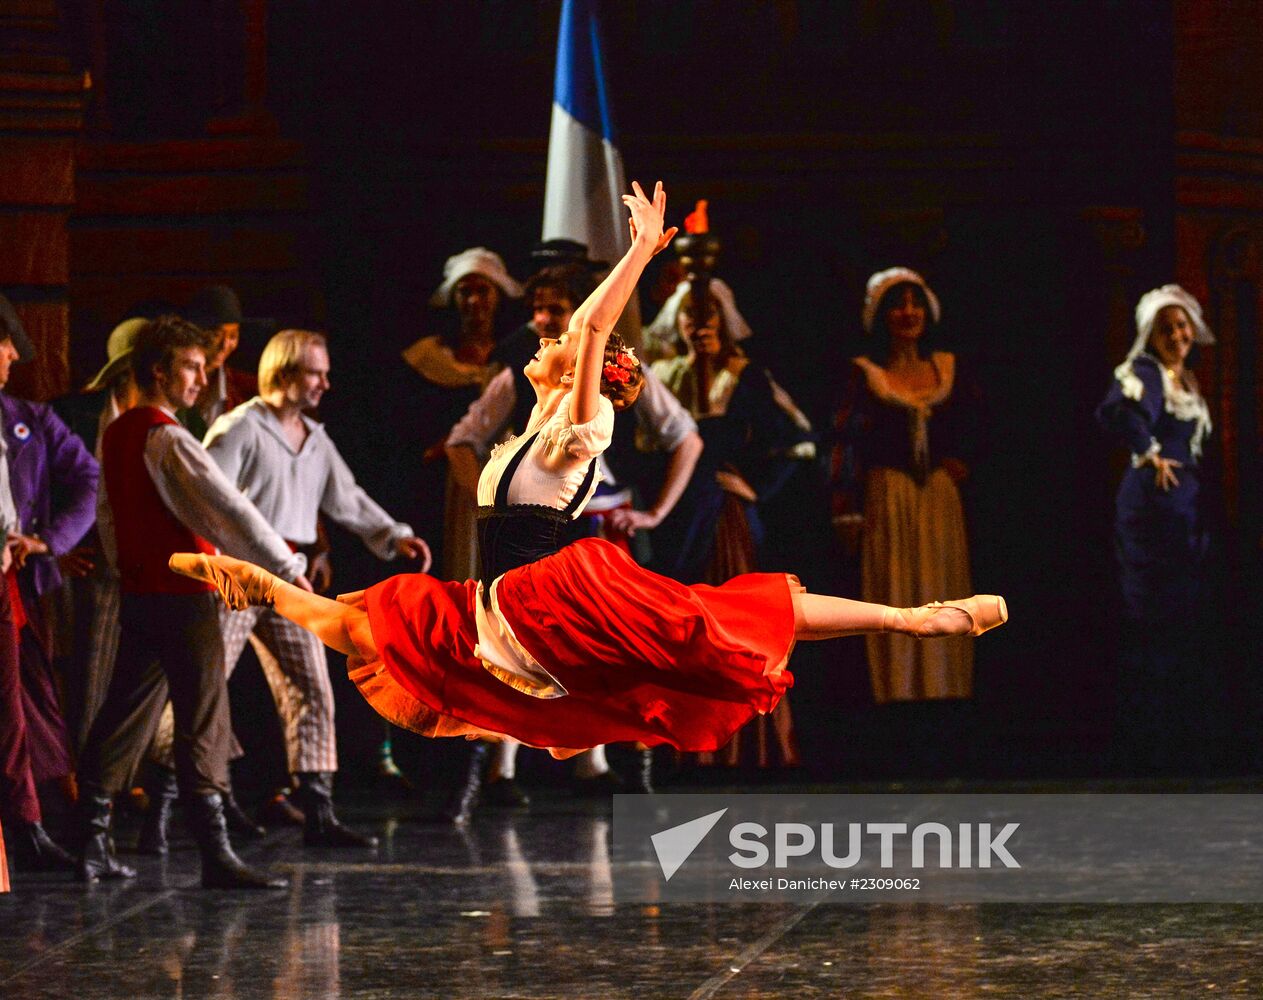 Events mark 180th anniversary of St. Petersburg's Mikhailovsky Theater